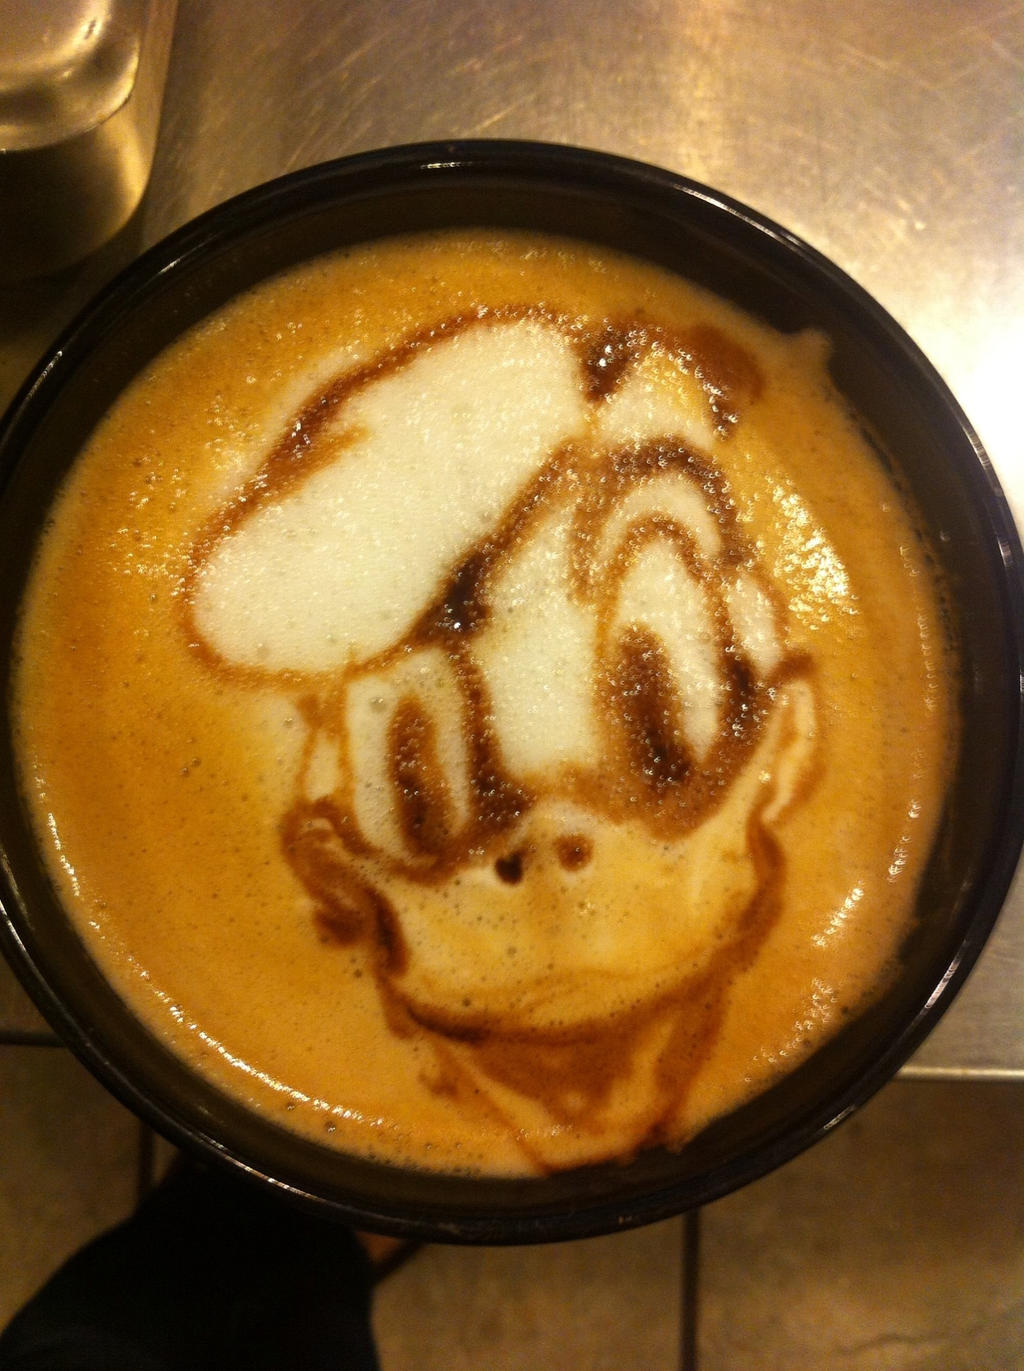 [Bild: donald_duck_latte_by_coffee_katie-d60bkhz.jpg]